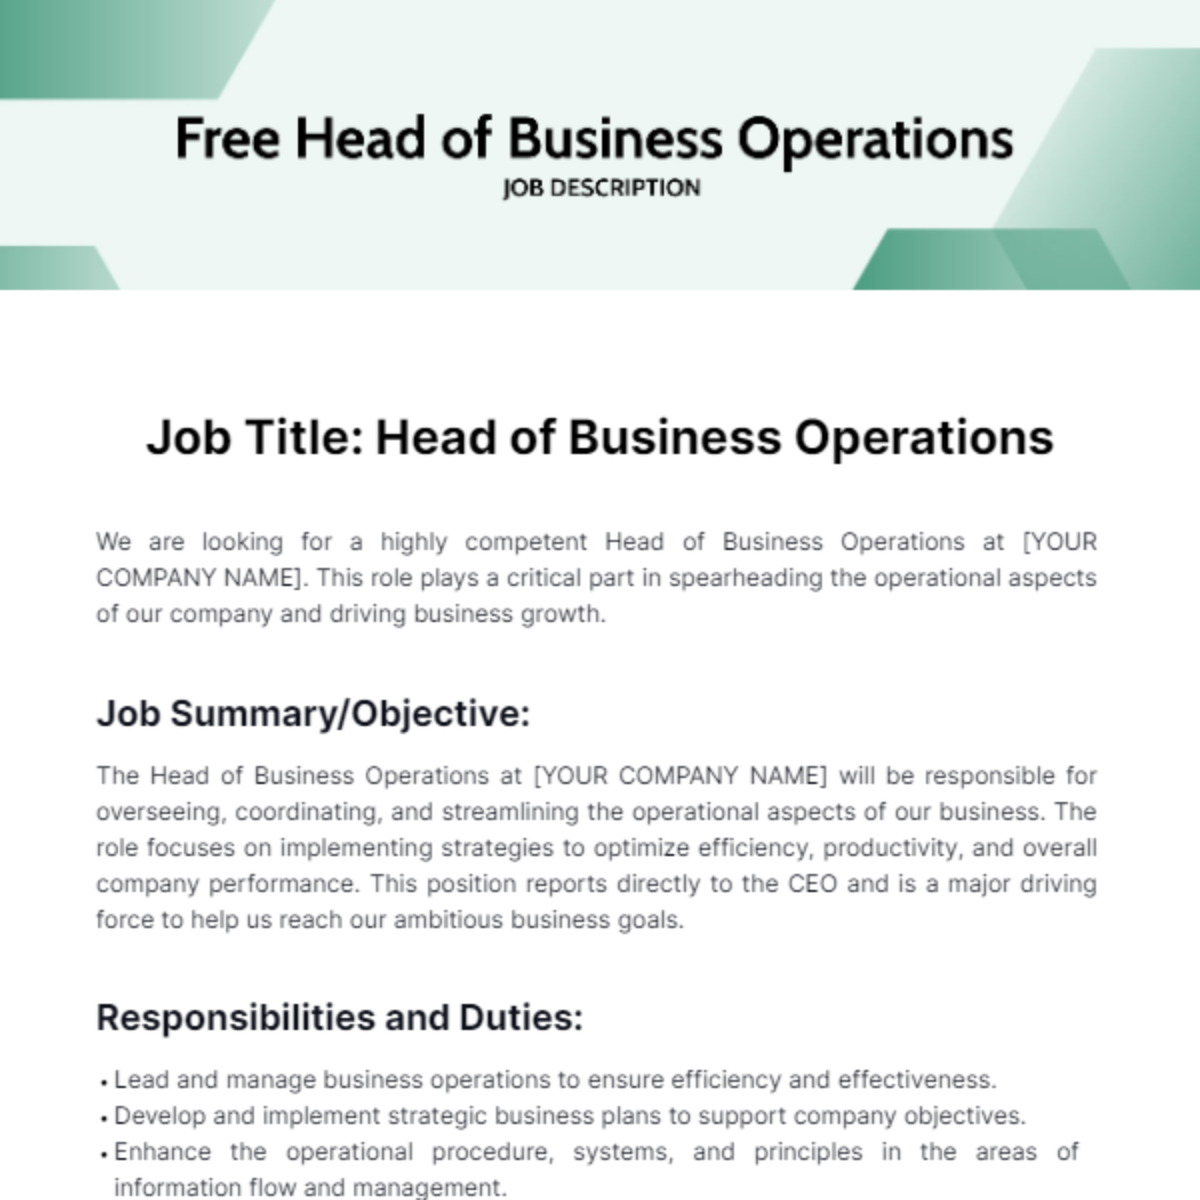 Free Head of Business Operations Job Description Template